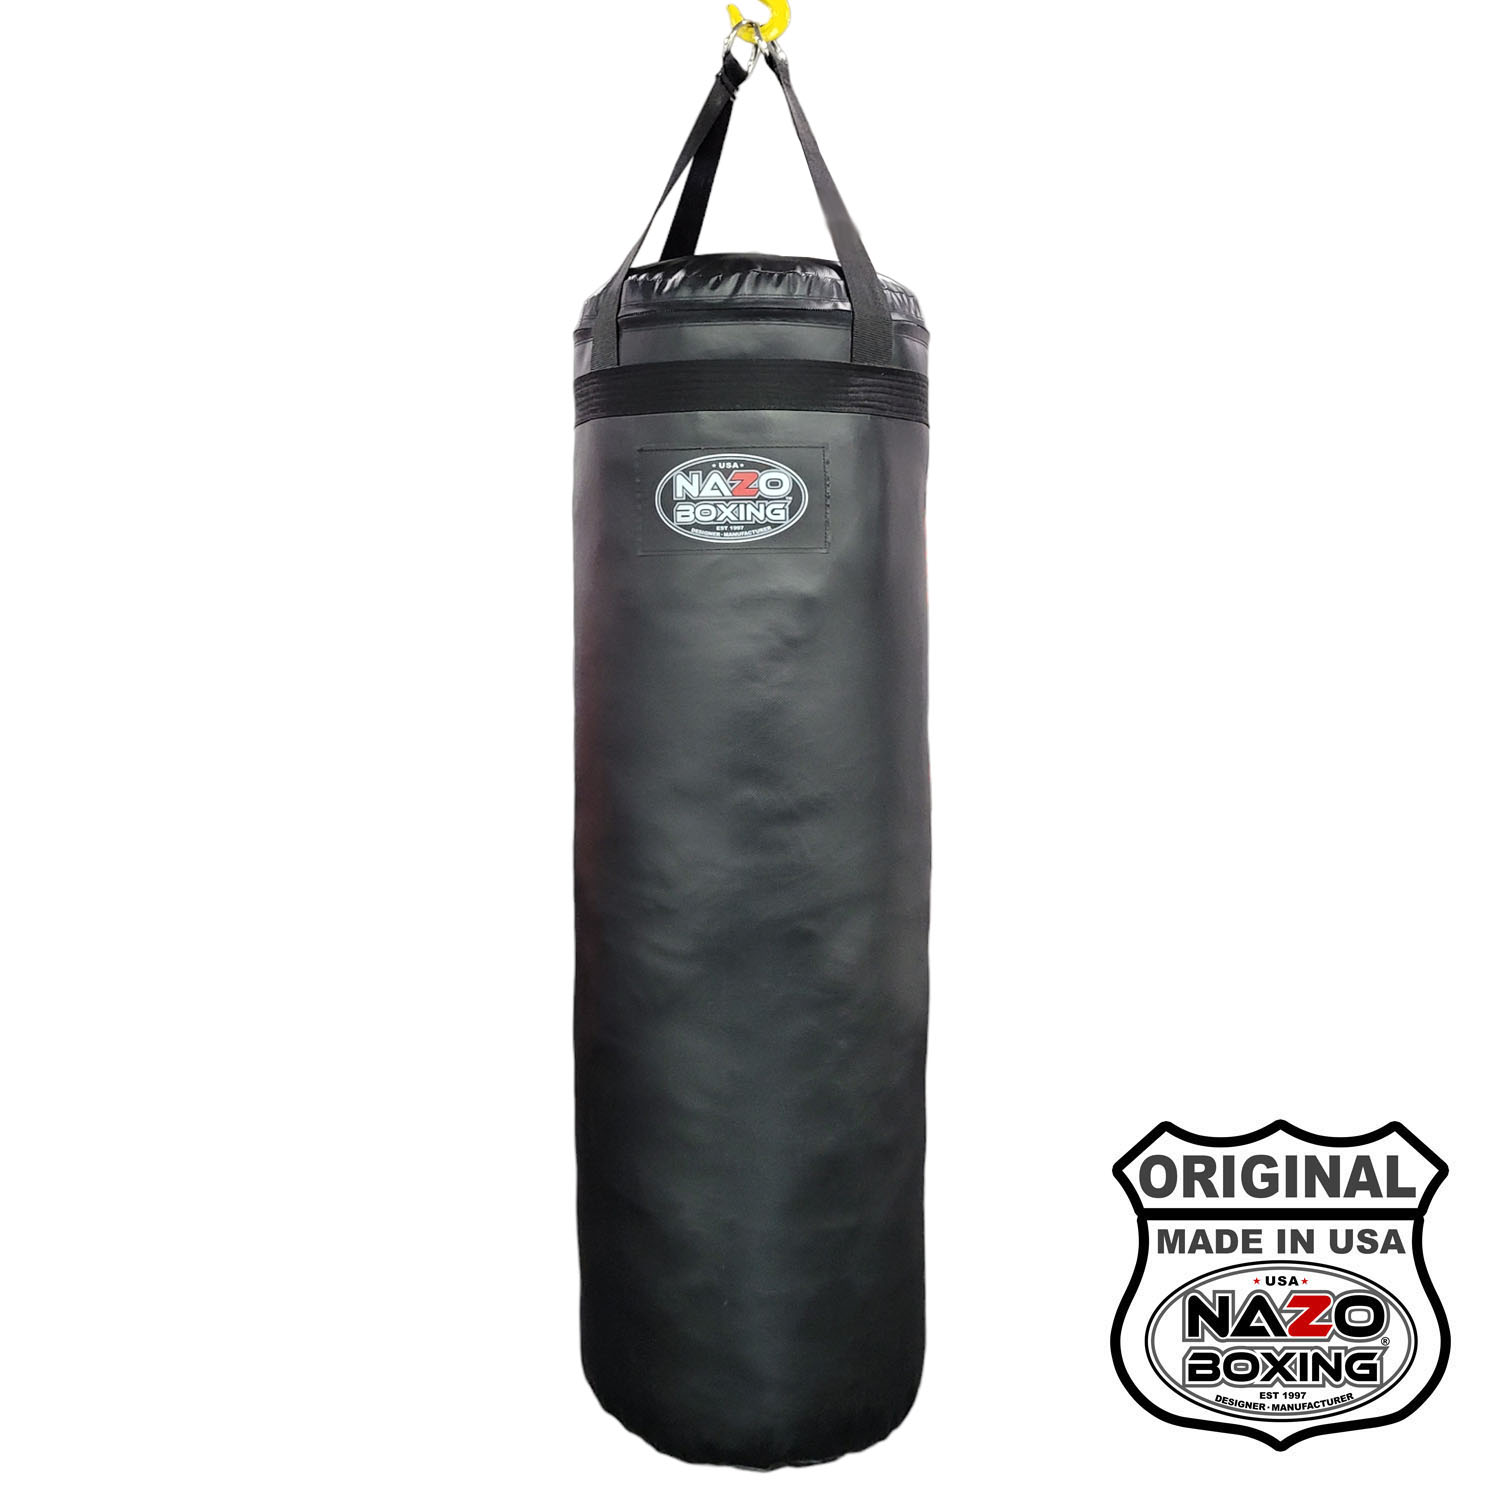 PRO Boxing 100 lbs. Heavy Punching Bag - Pro Boxing Store